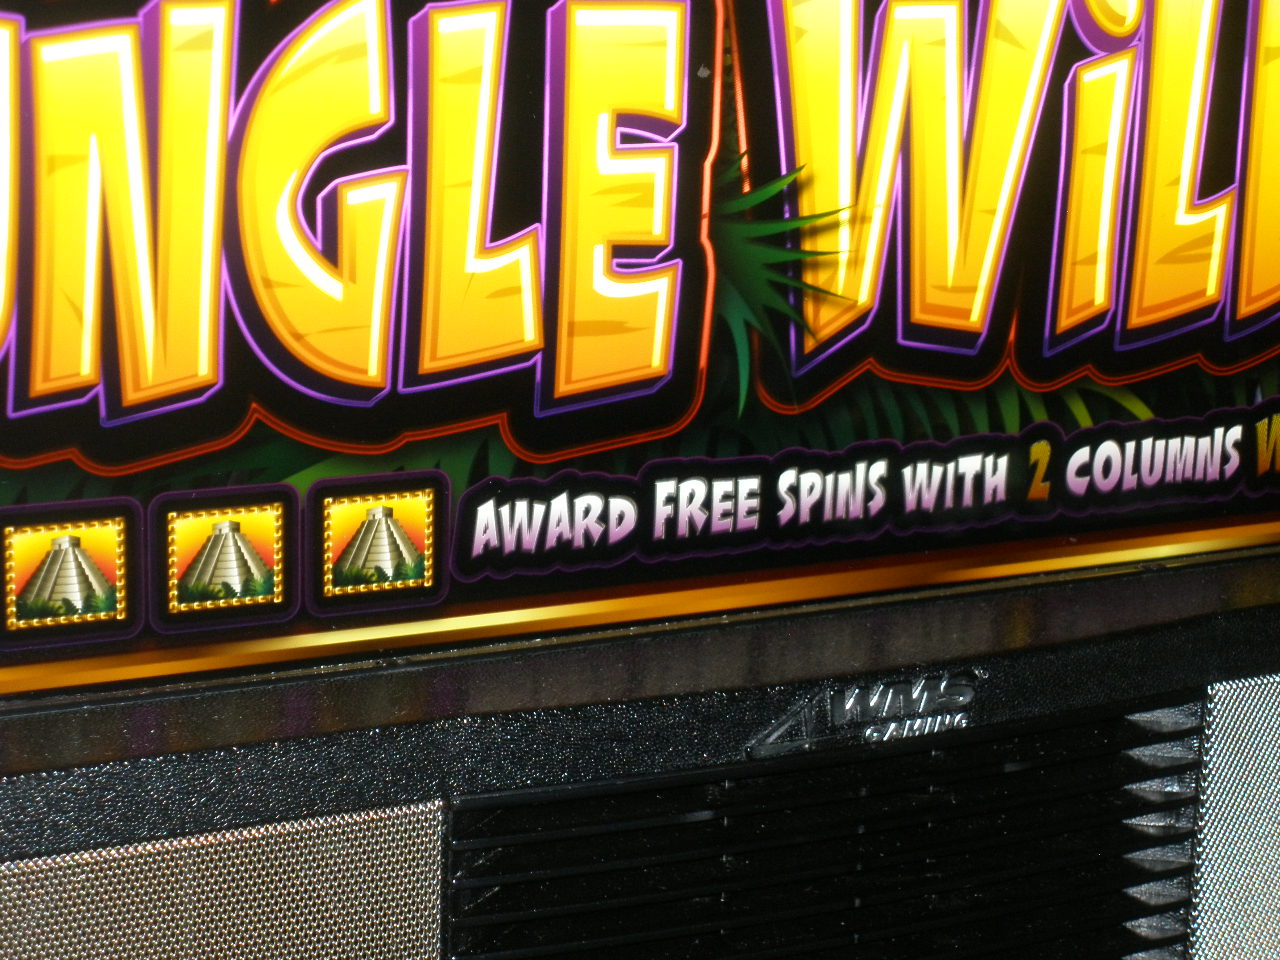 jungle wild 2 slot machine free download